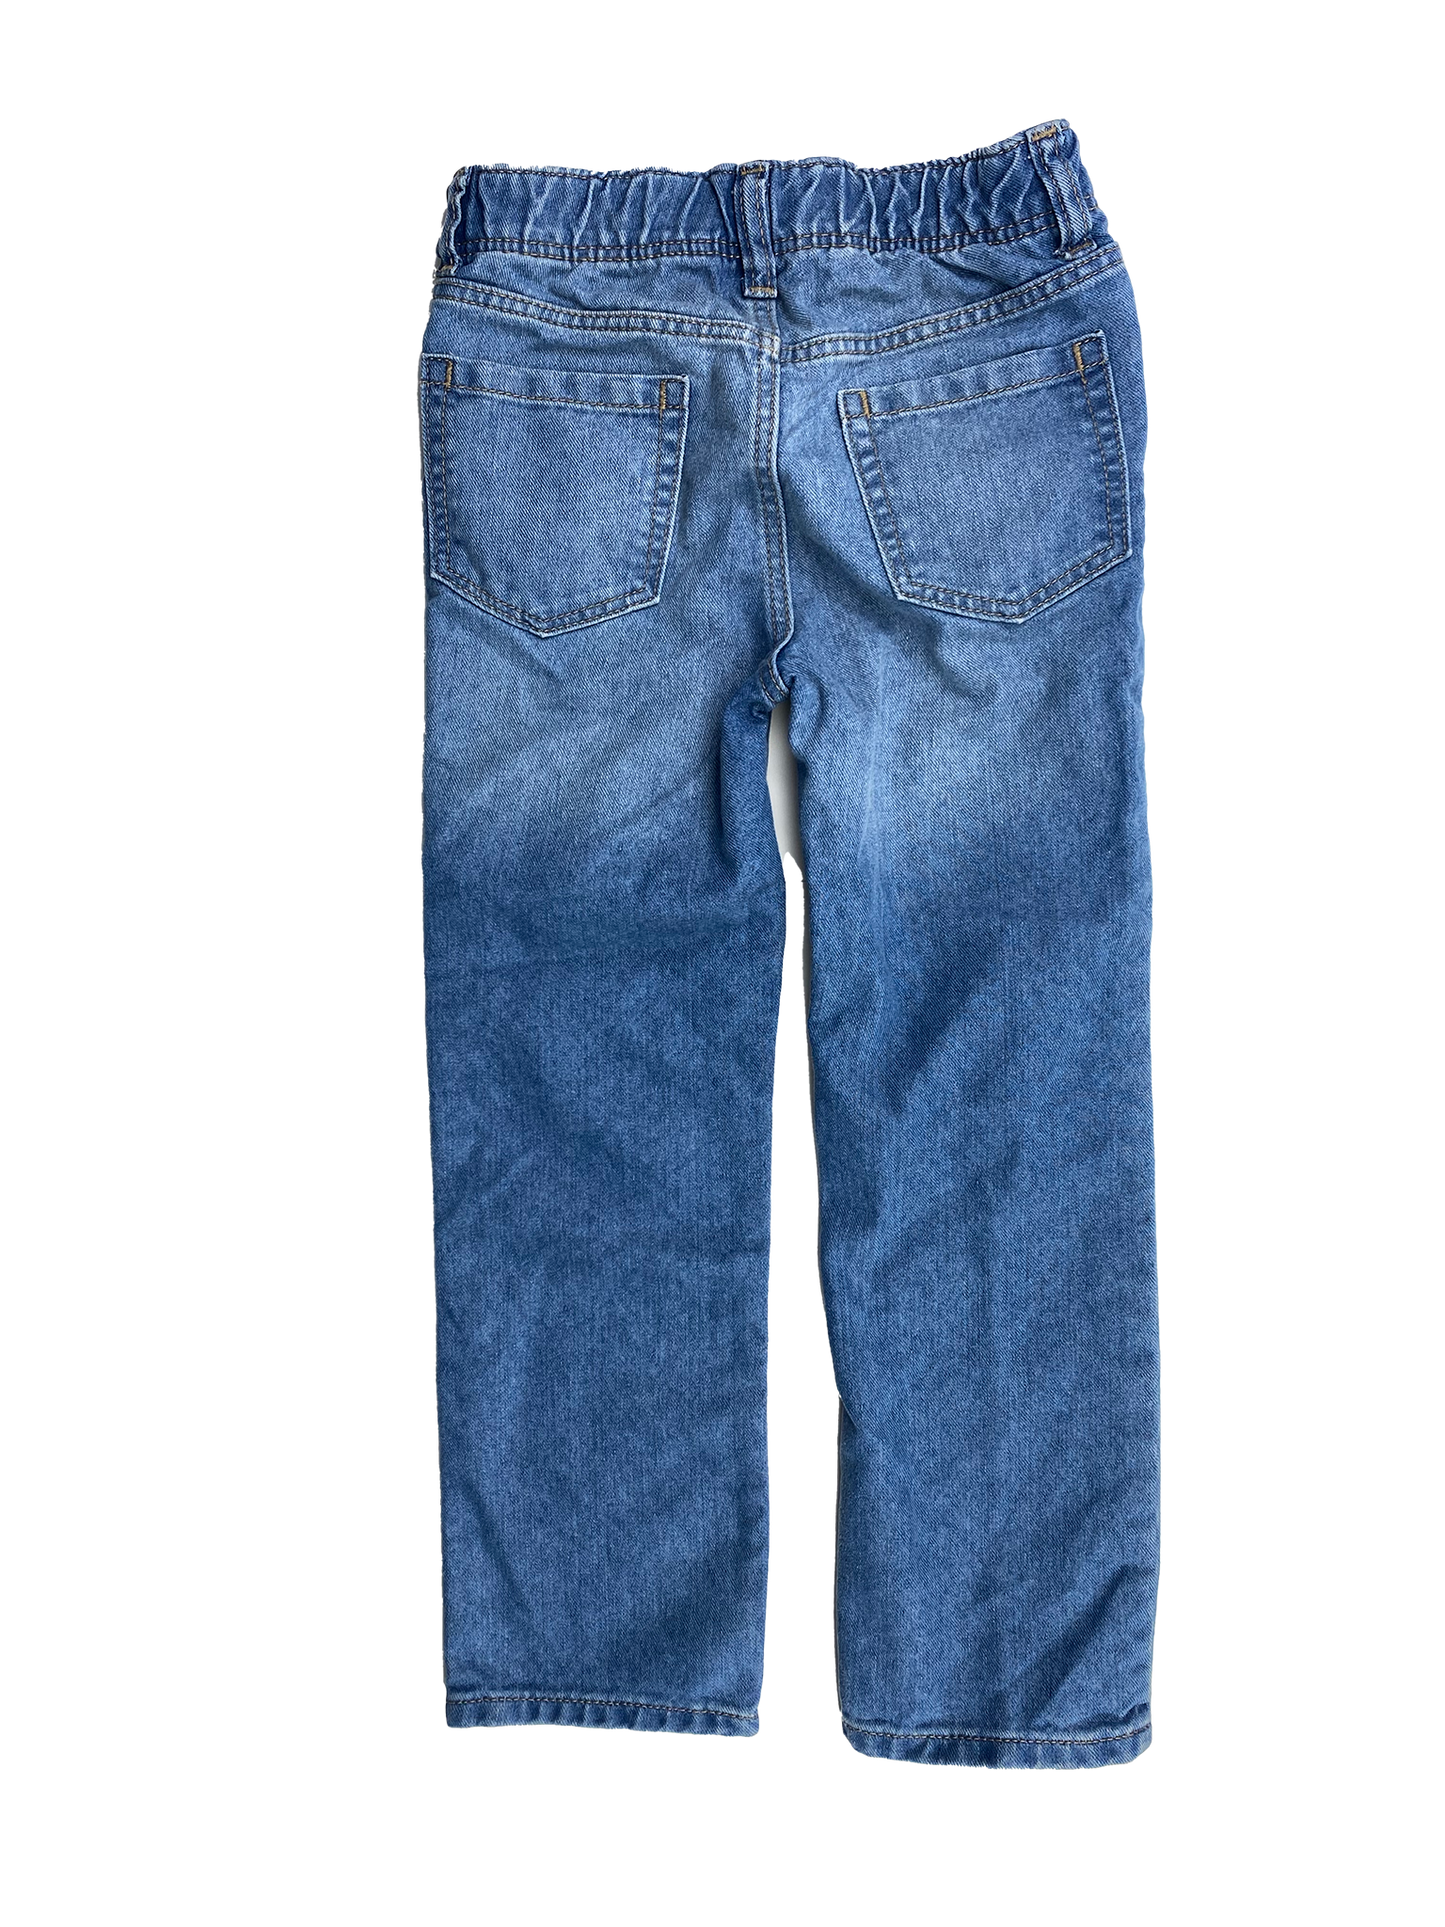 Old Navy Straight Leg Medium Wash Jeans 5T